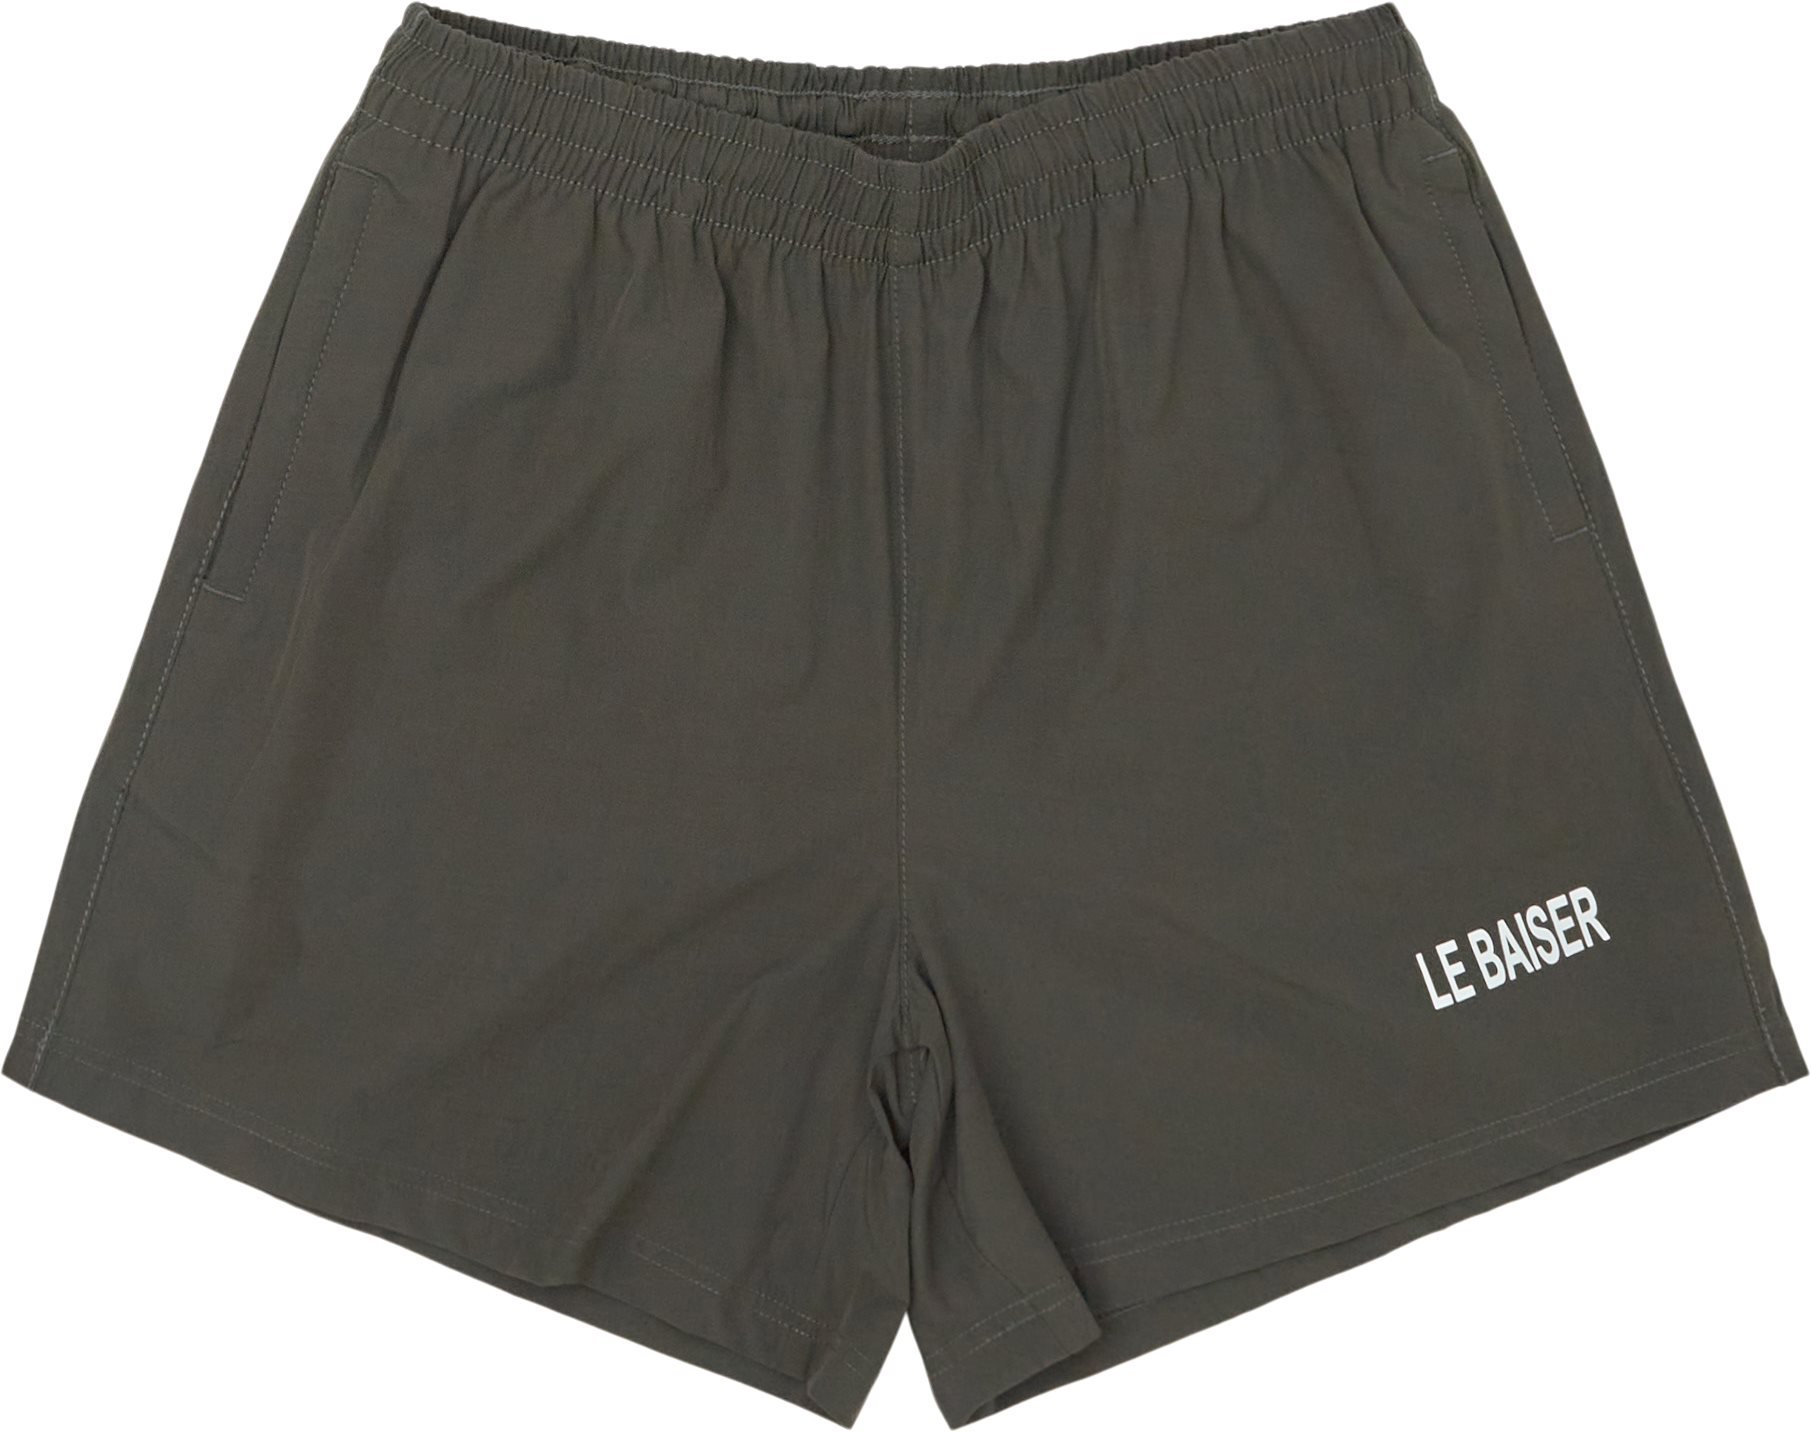 Fraise Shorts - Shorts - Regular fit - Army